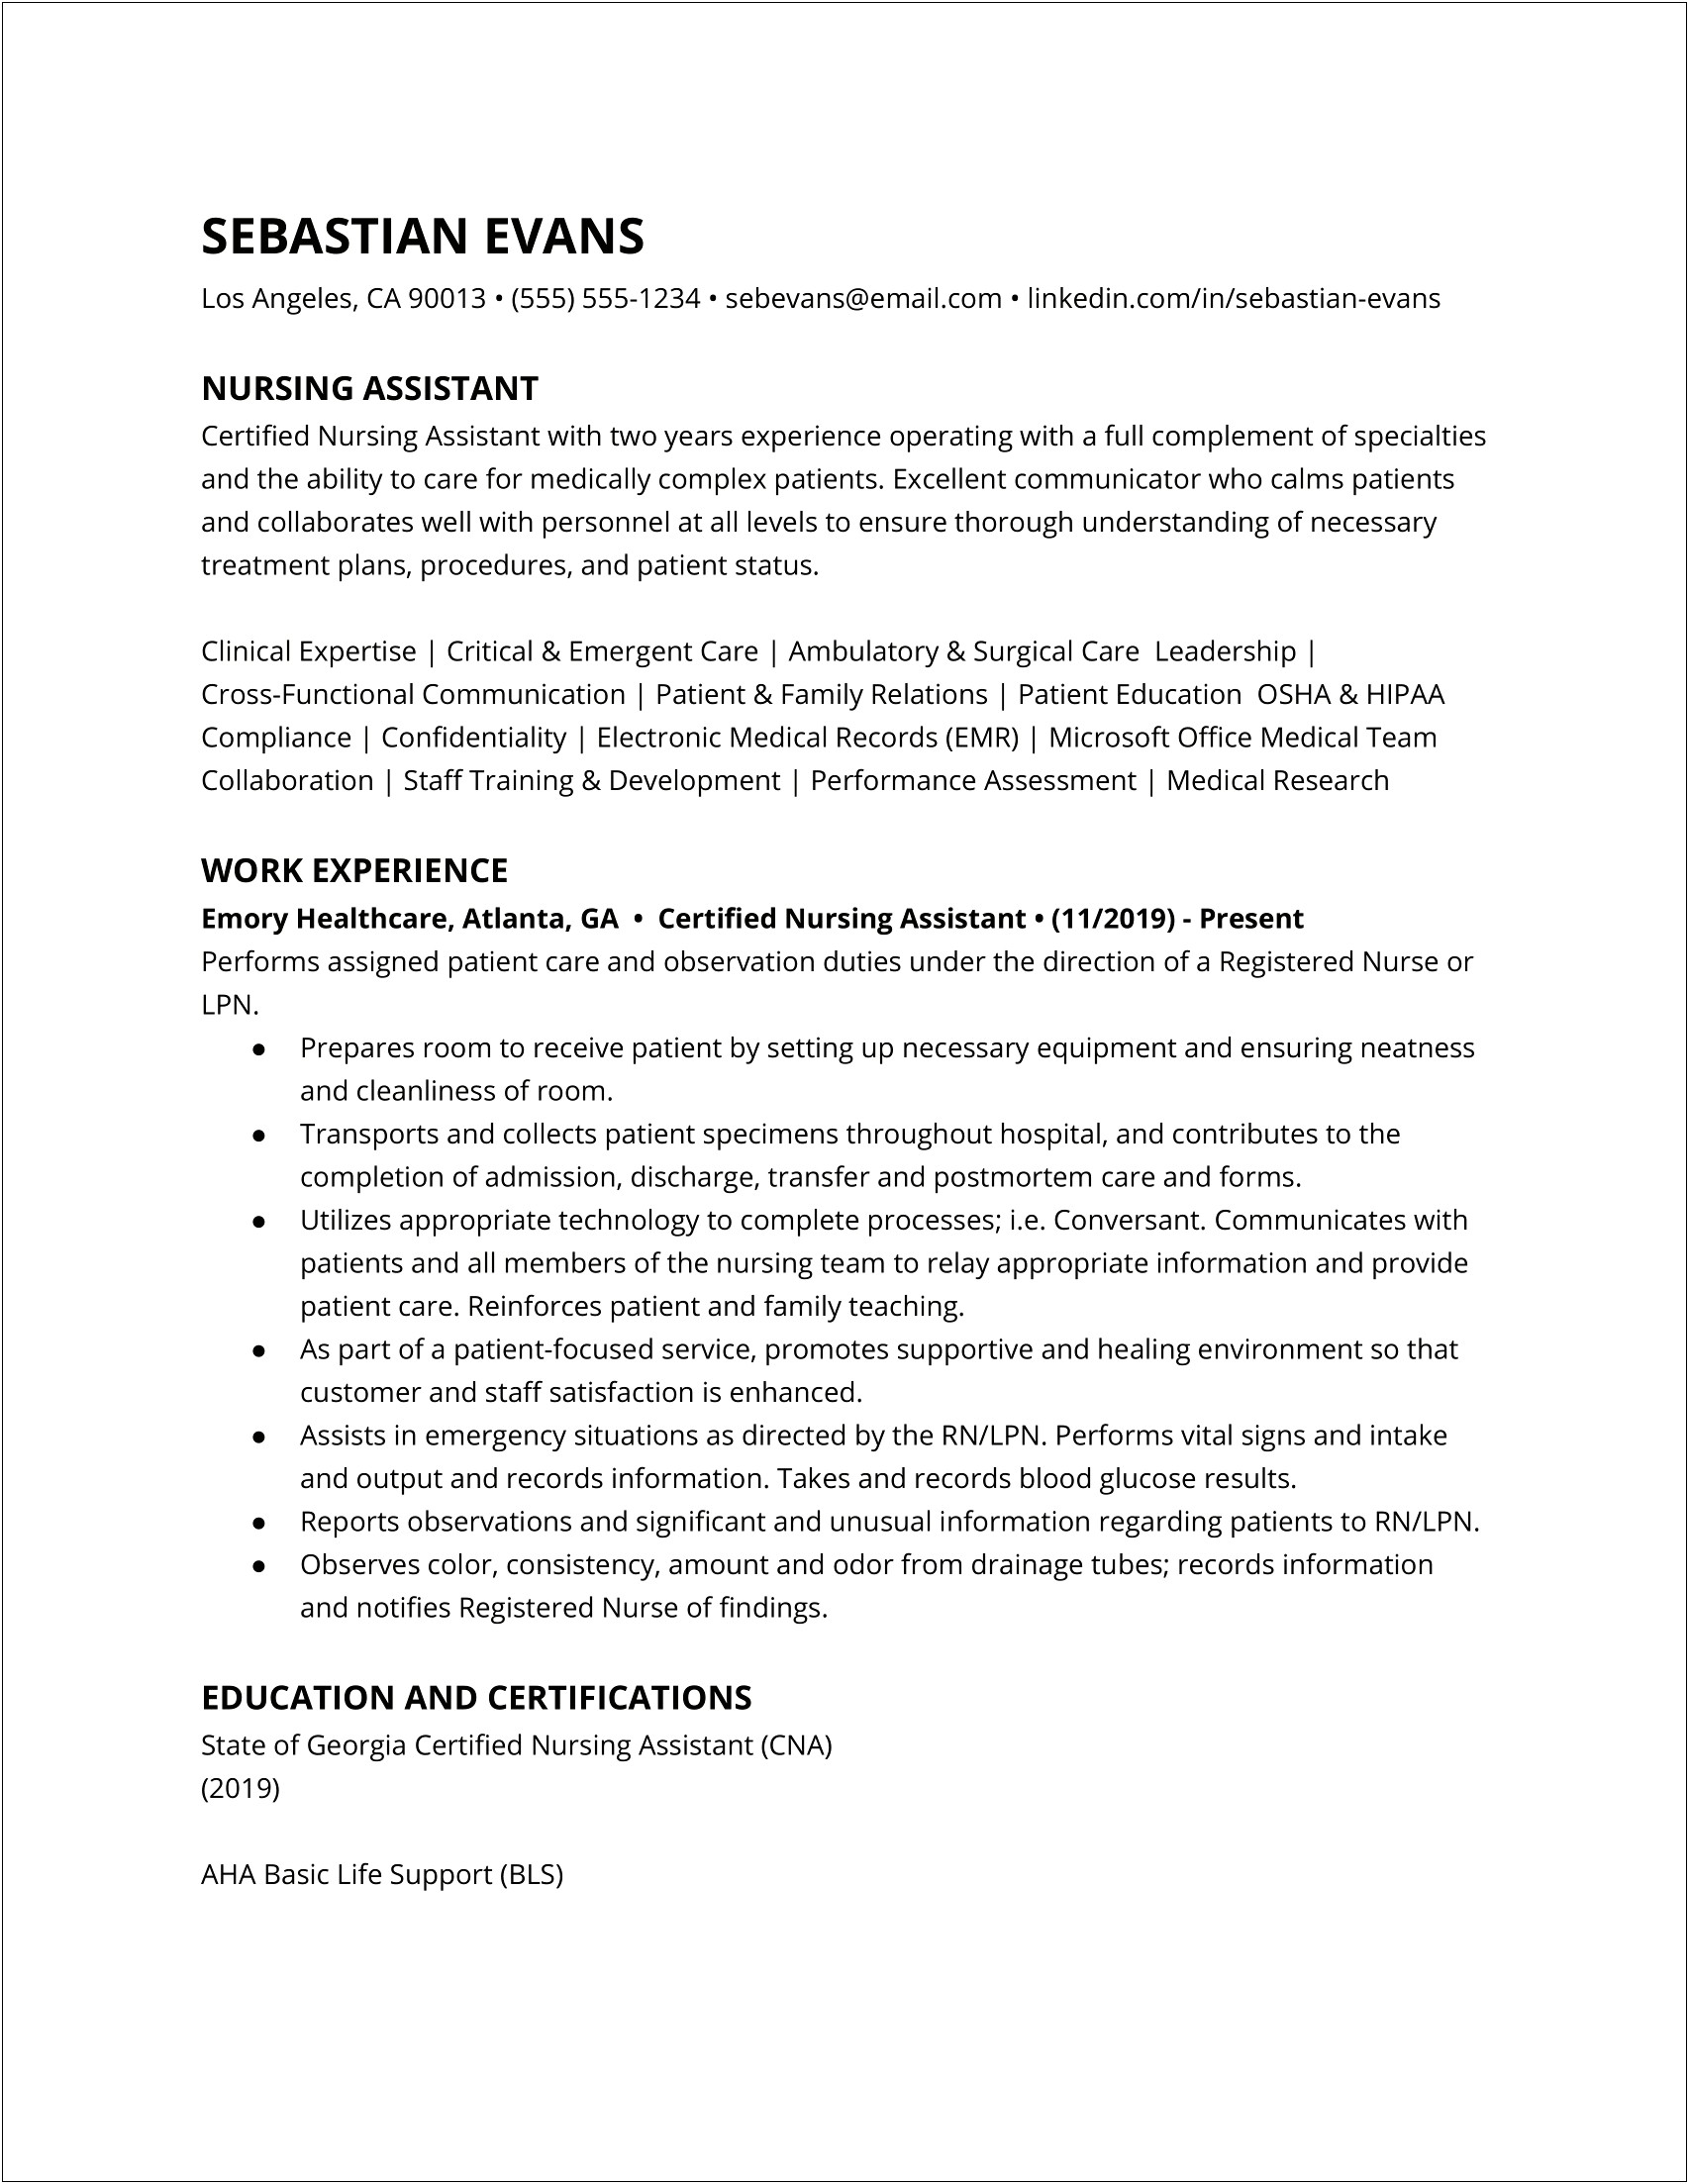 Certified Nursing Assistant Cover Letter Resume